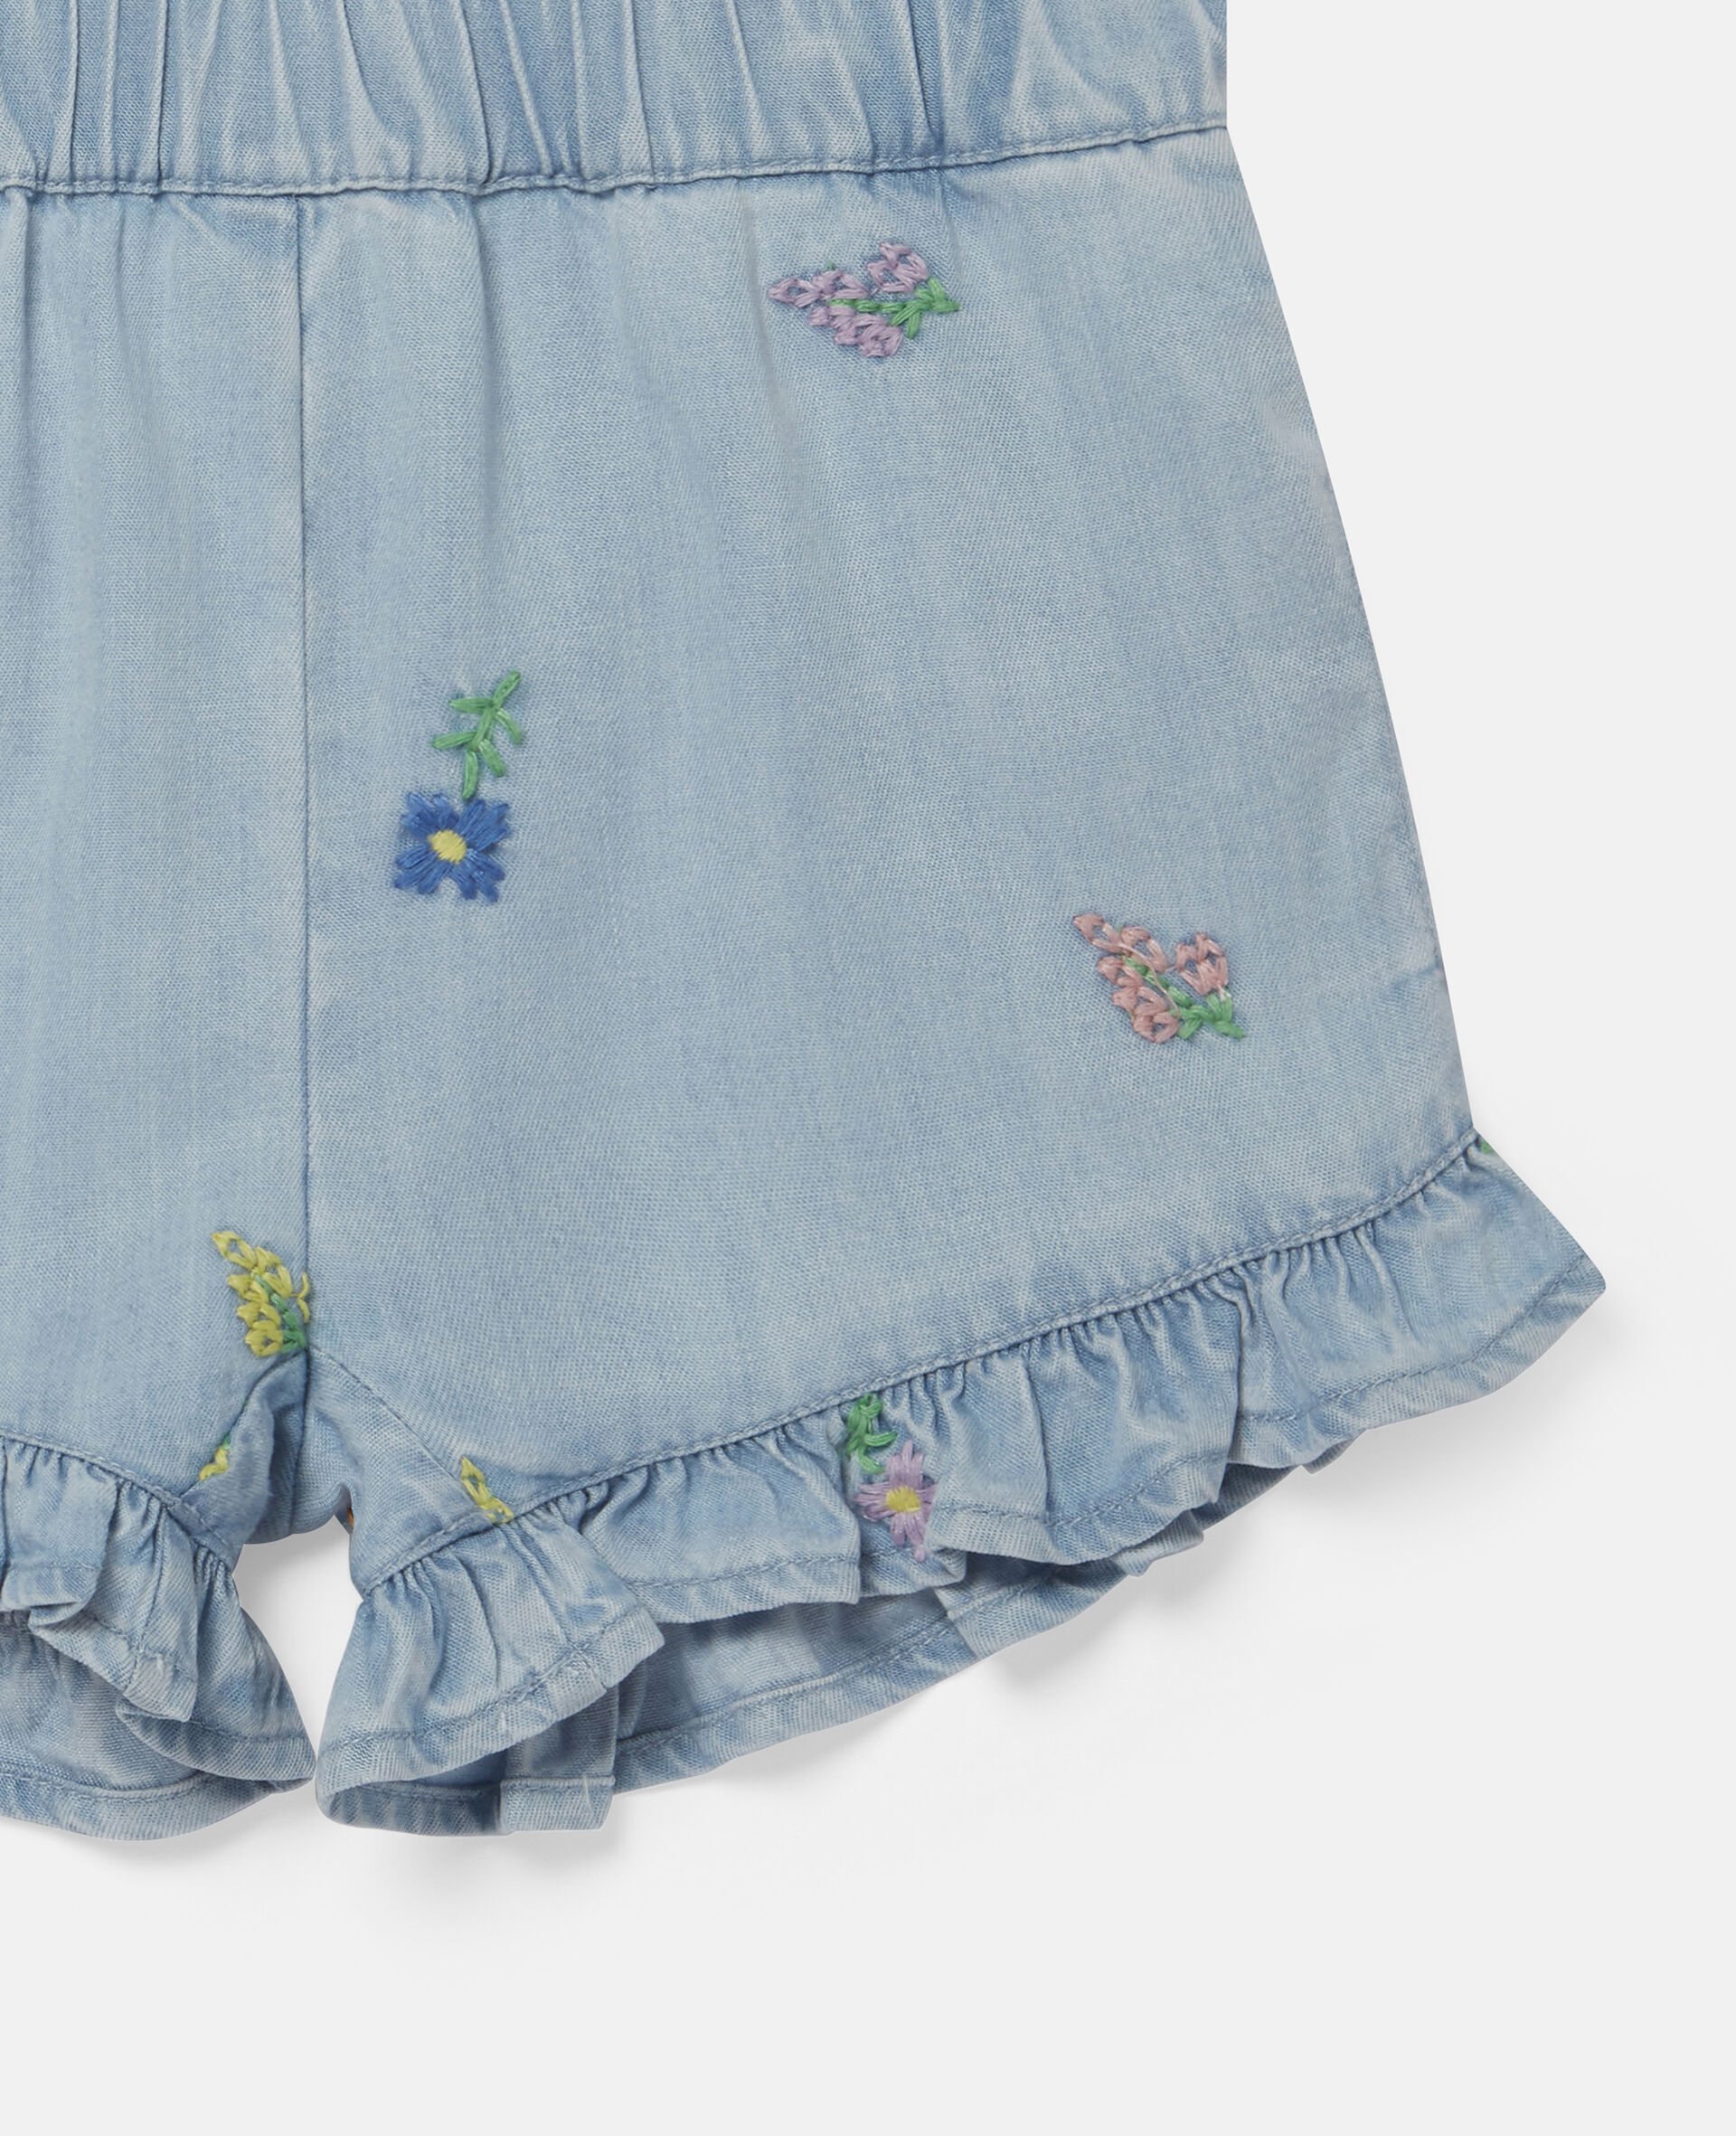 Embroidered Flowers Denim Shorts-Blue-large image number 2